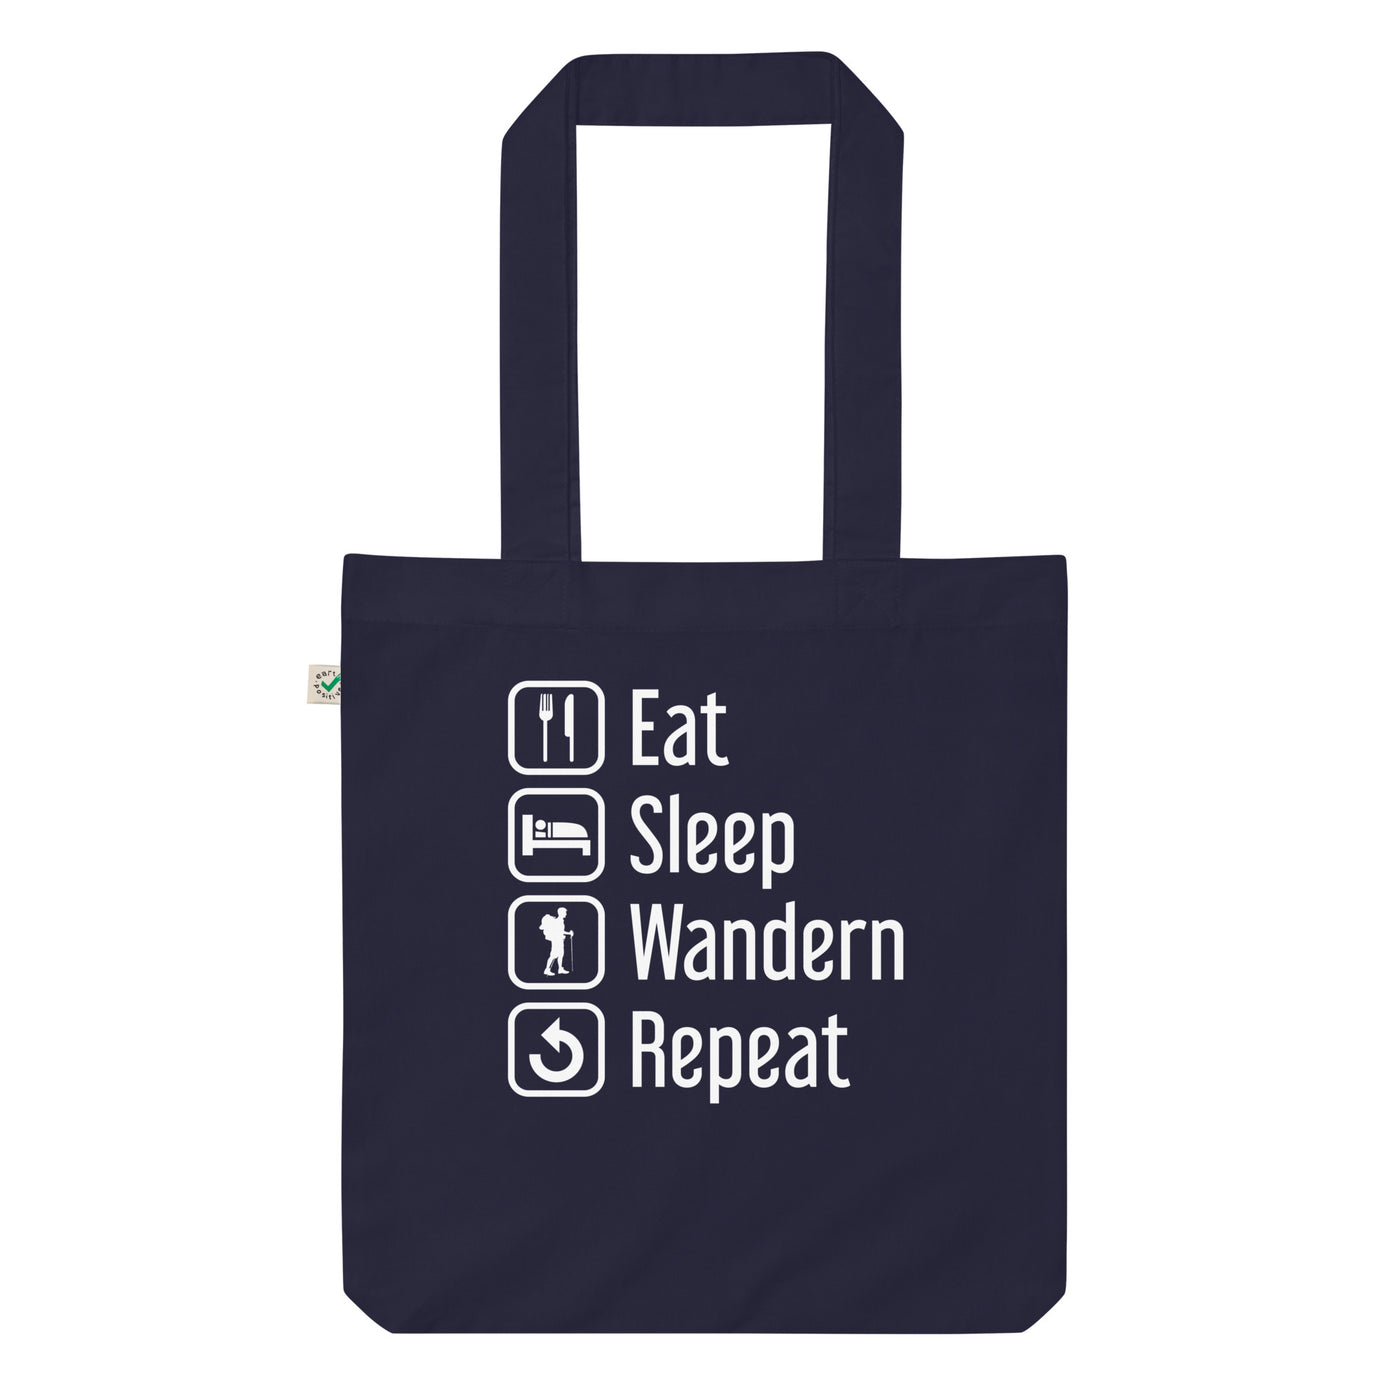 Eat Sleep Wandern Repeat - Organic Einkaufstasche wandern